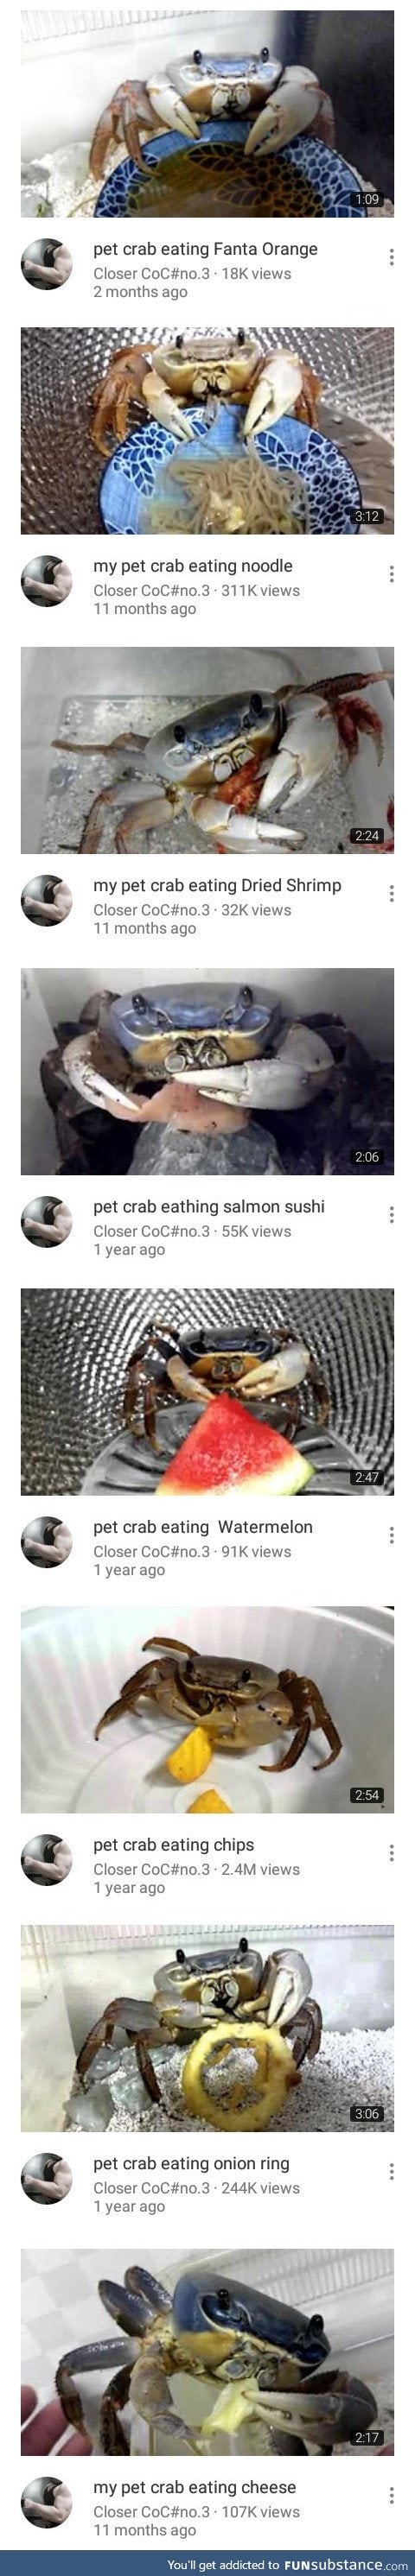 Crab eating stuff